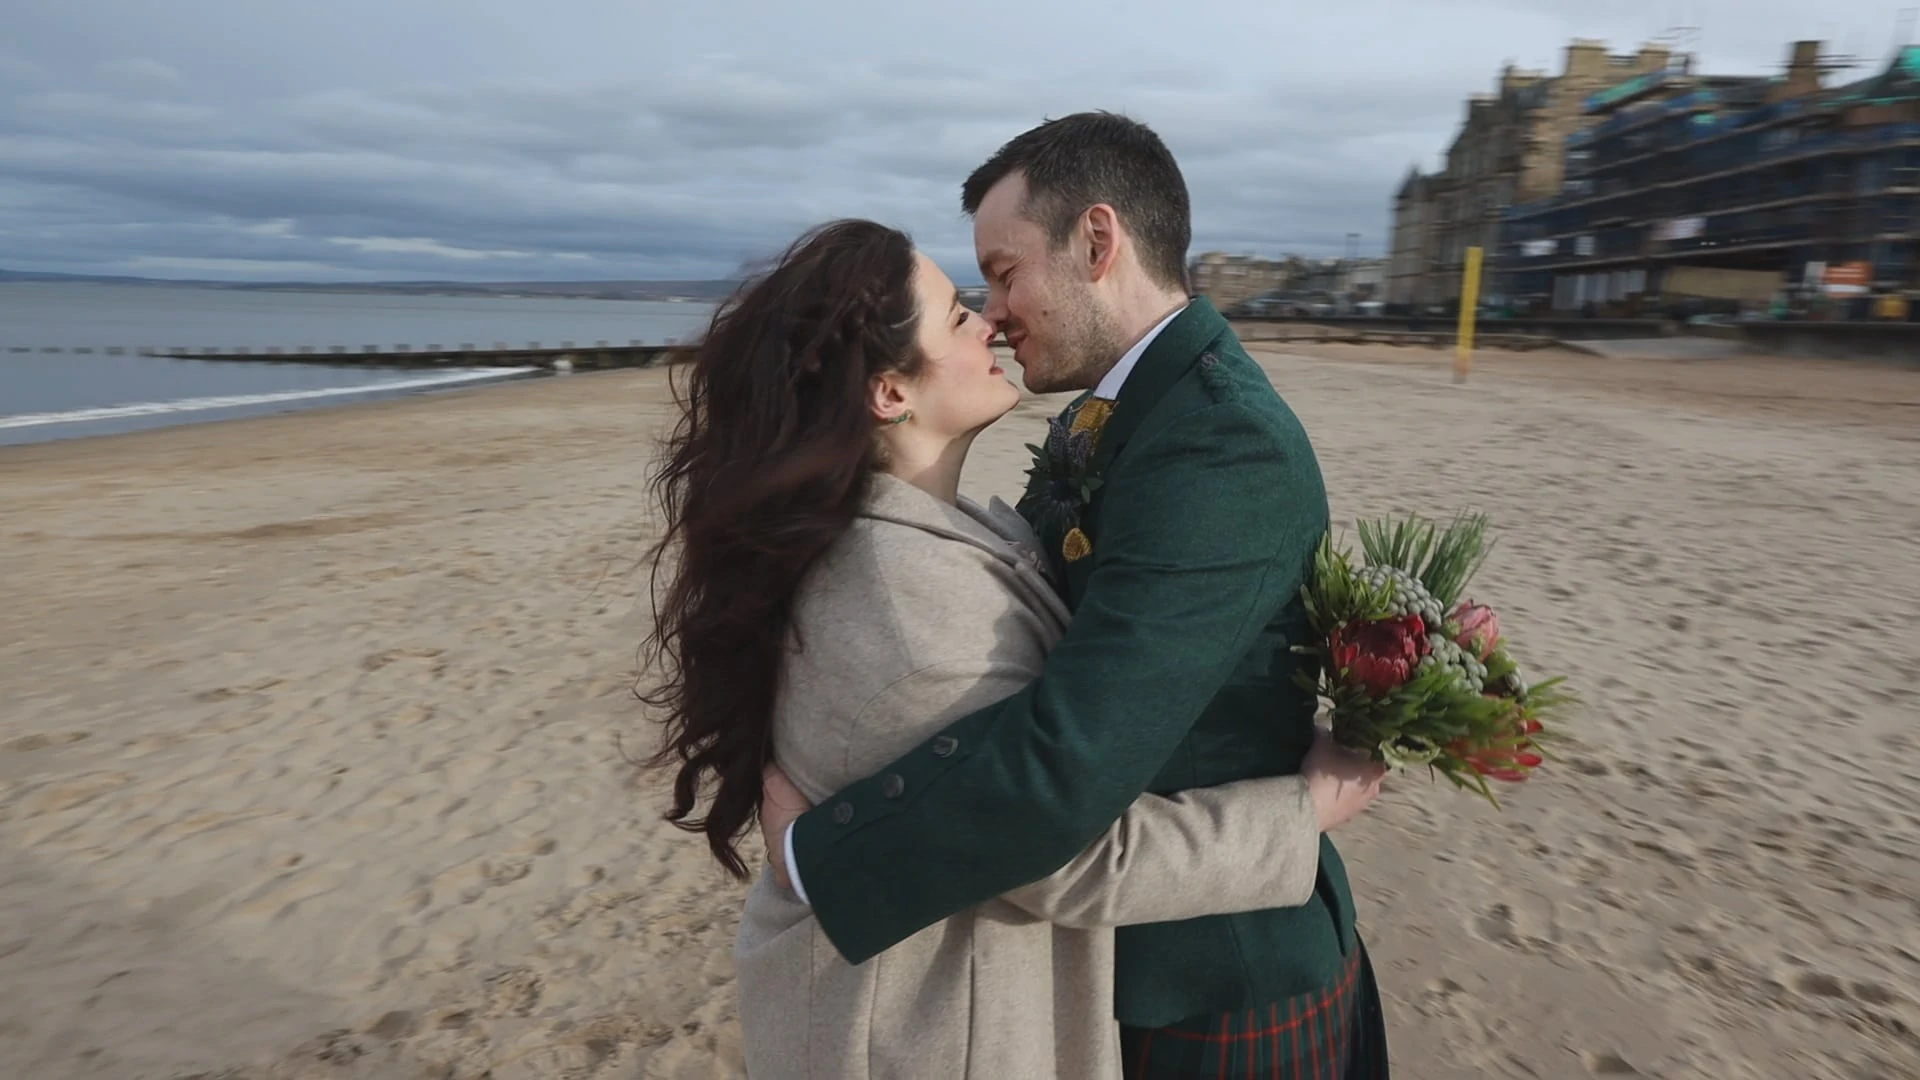 Wedding Videographers In Edinburgh – Suzie and Kevin’s Amazing Celebration At Bellfield